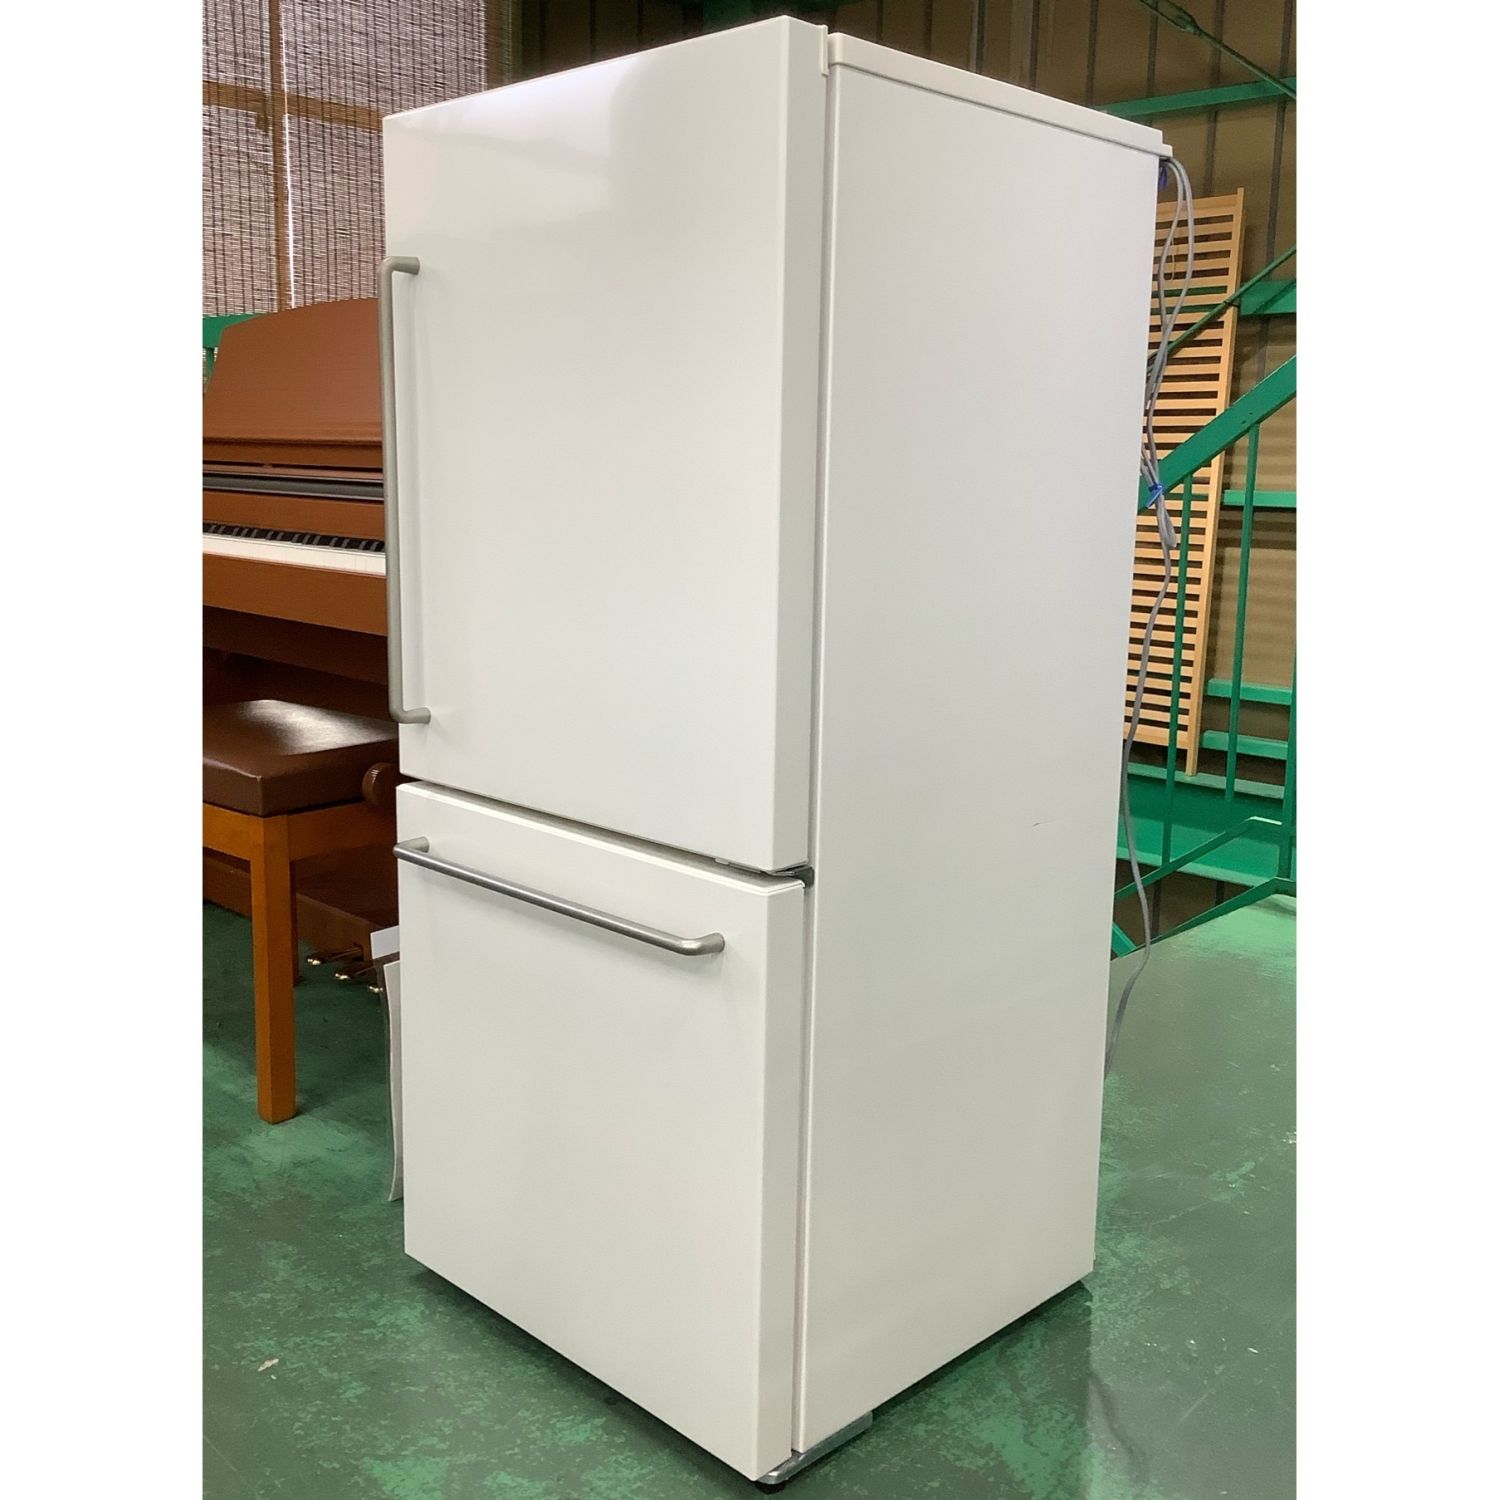 ぼん様専用 無印良品 MJ-R16A-1 冷凍冷蔵庫 2017年製✨ - 冷蔵庫・冷凍庫